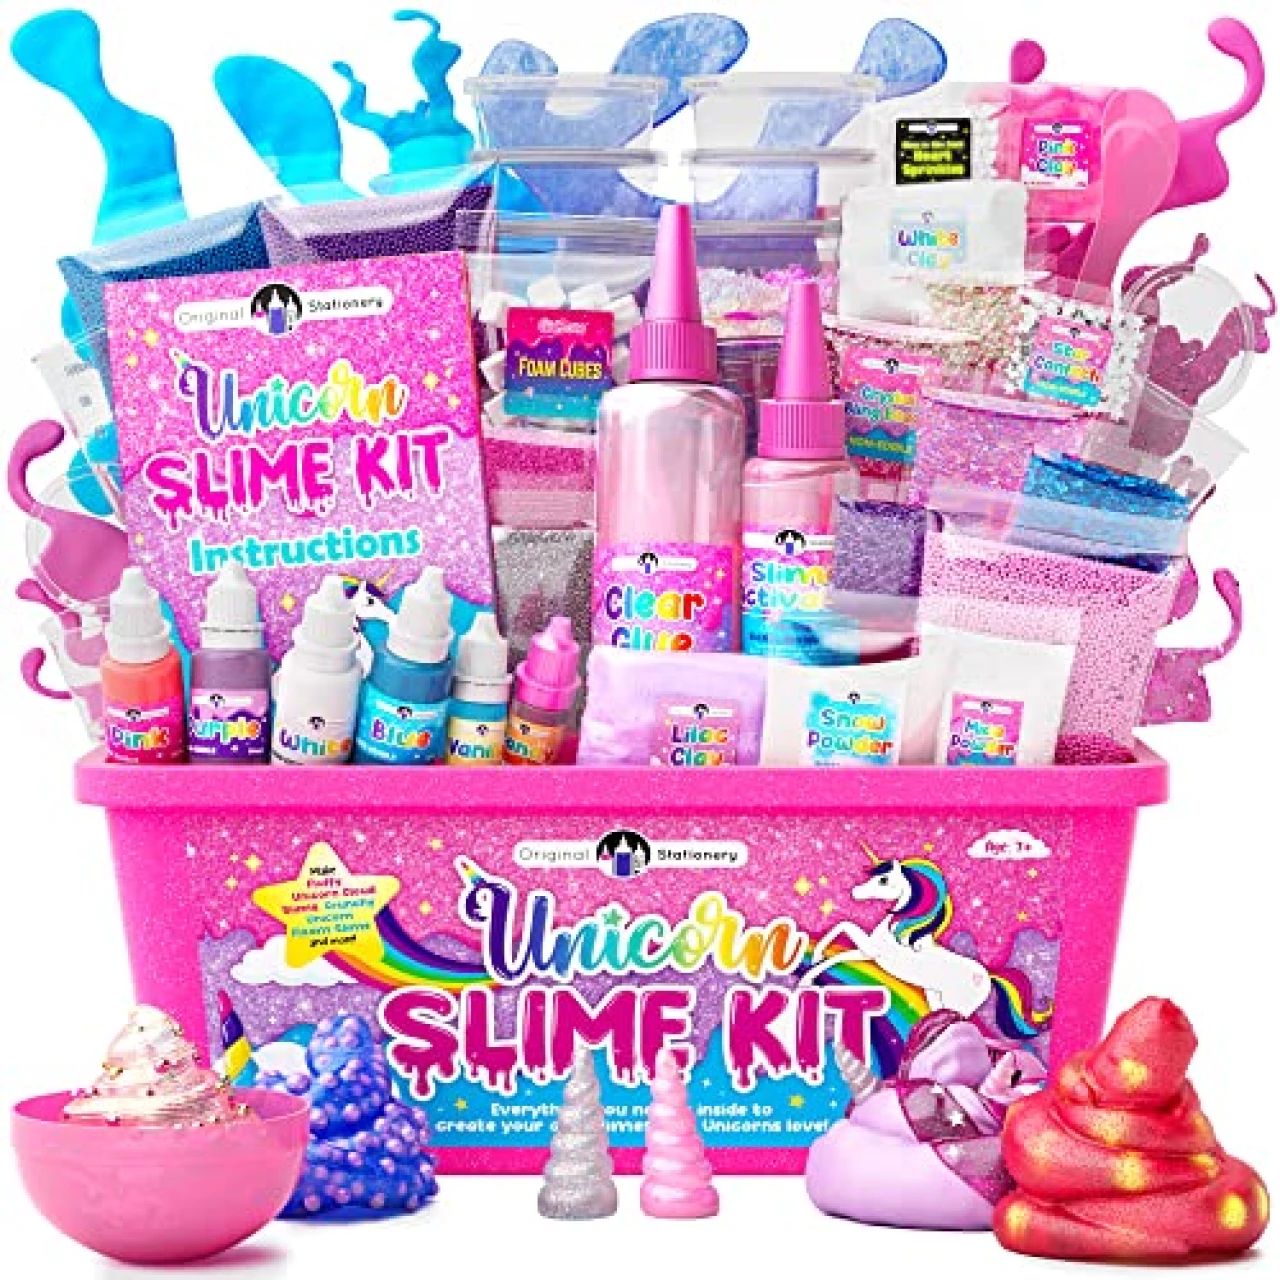 Original Stationery Unicorn Magical Slime Kit for Girls 10-12